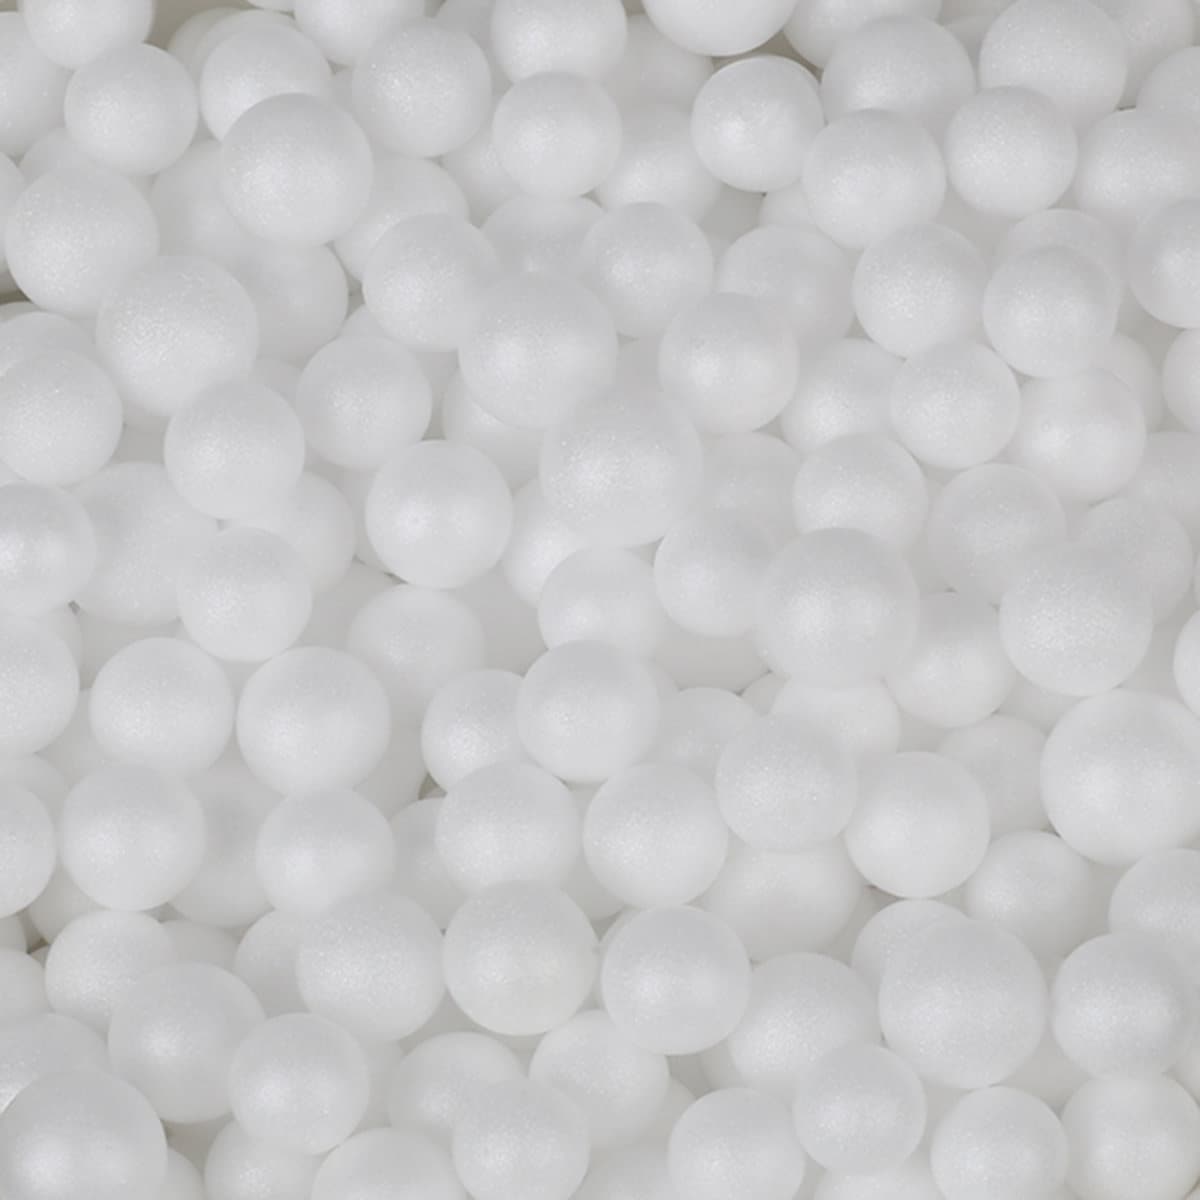 12 Small Styrofoam Balls, 1.3 Inch RR3 